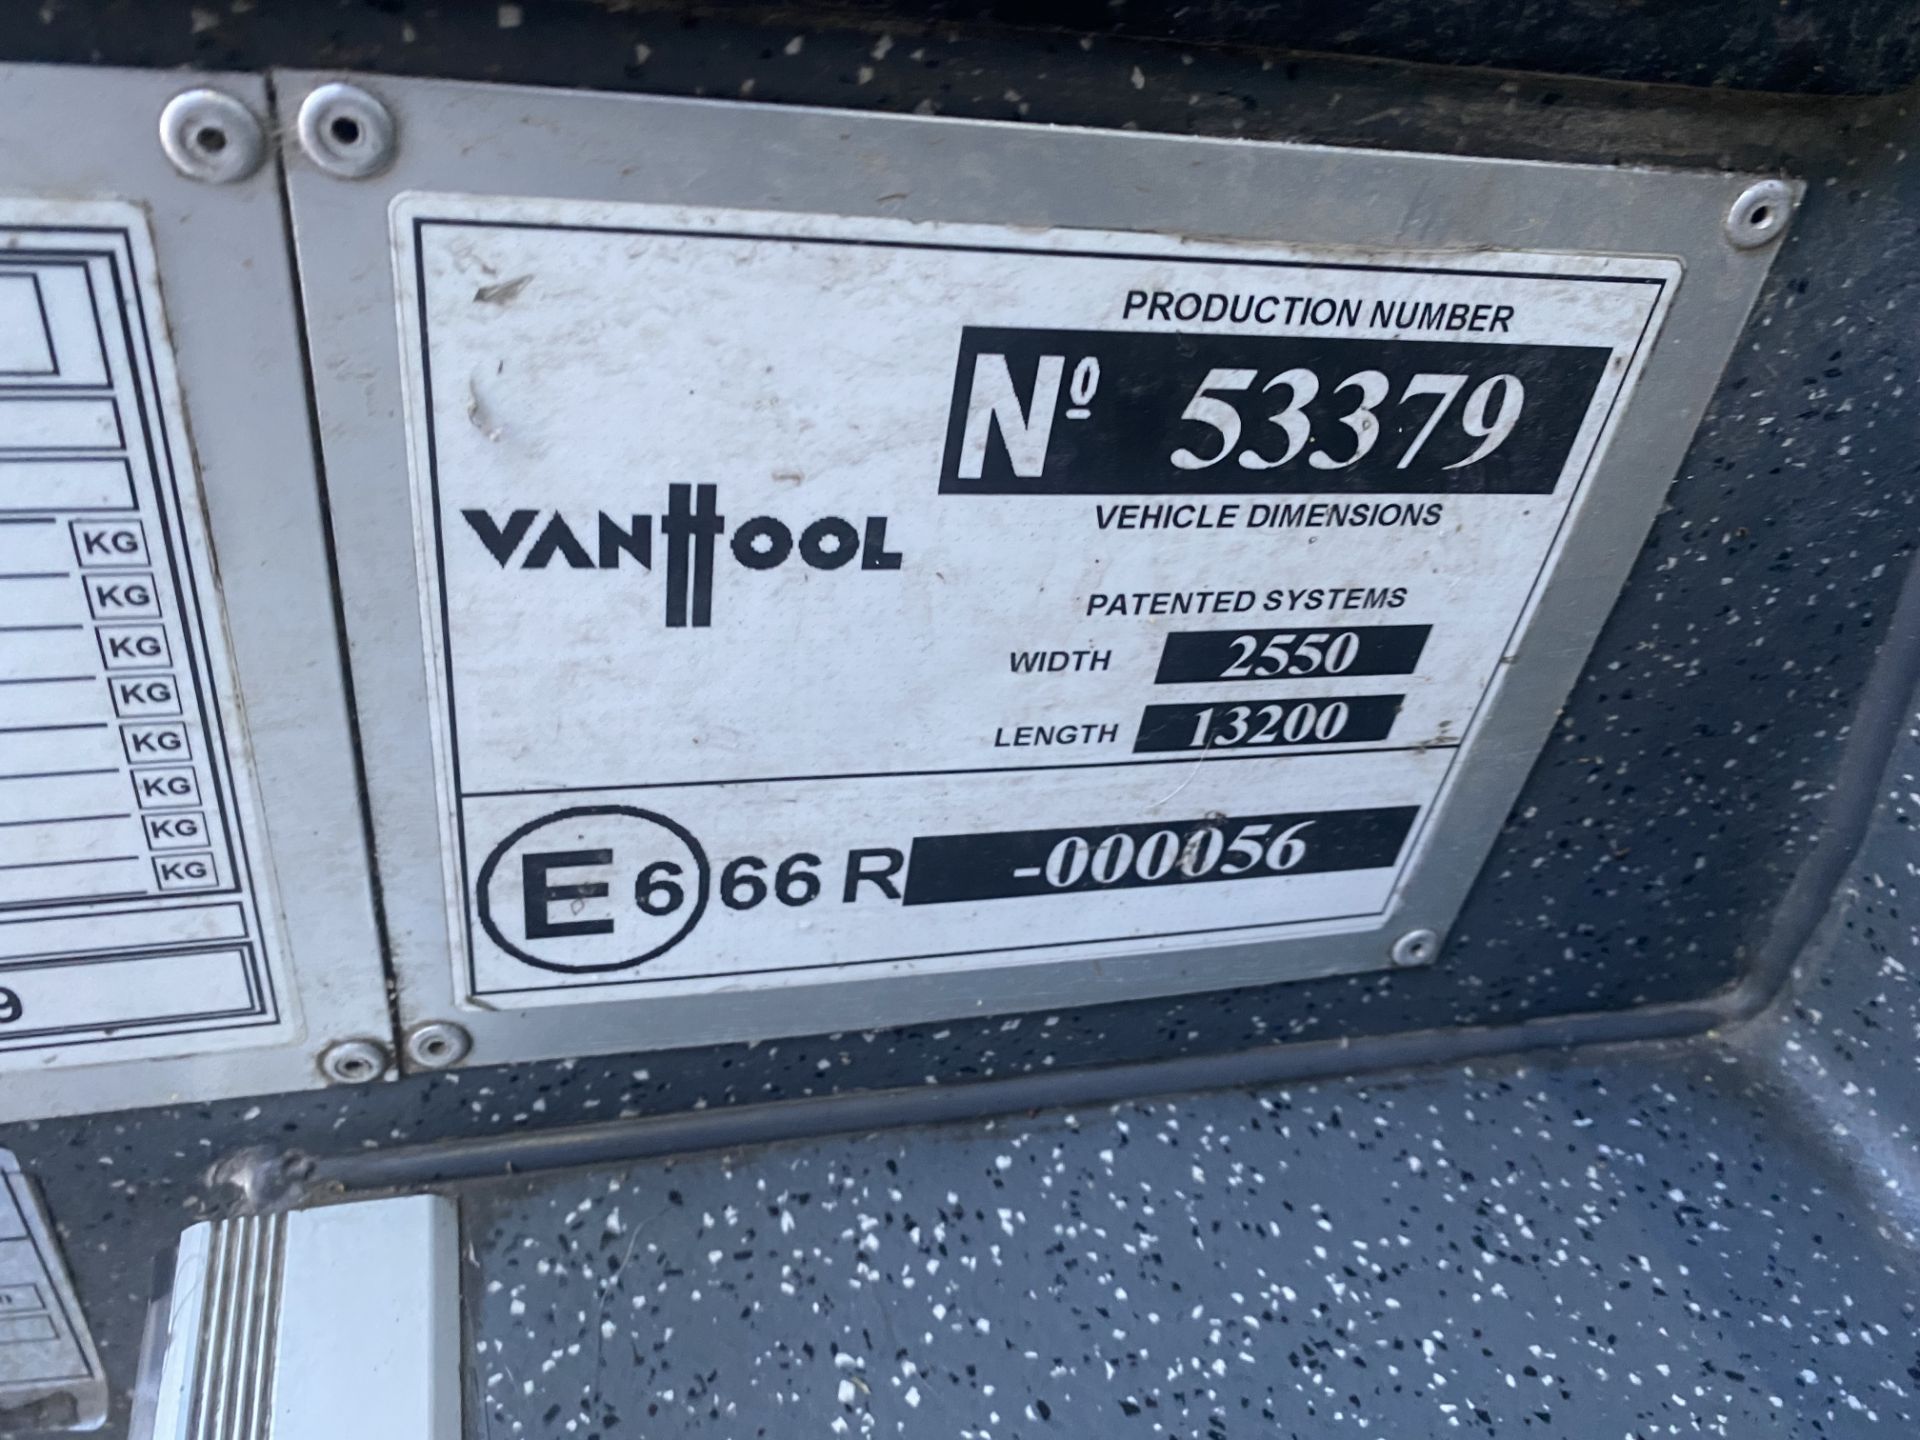 (2009) Vanhool Daf Astrobel 58+2 seater coach, registration M33NEC, odometer reading 786795 Km, - Image 17 of 20